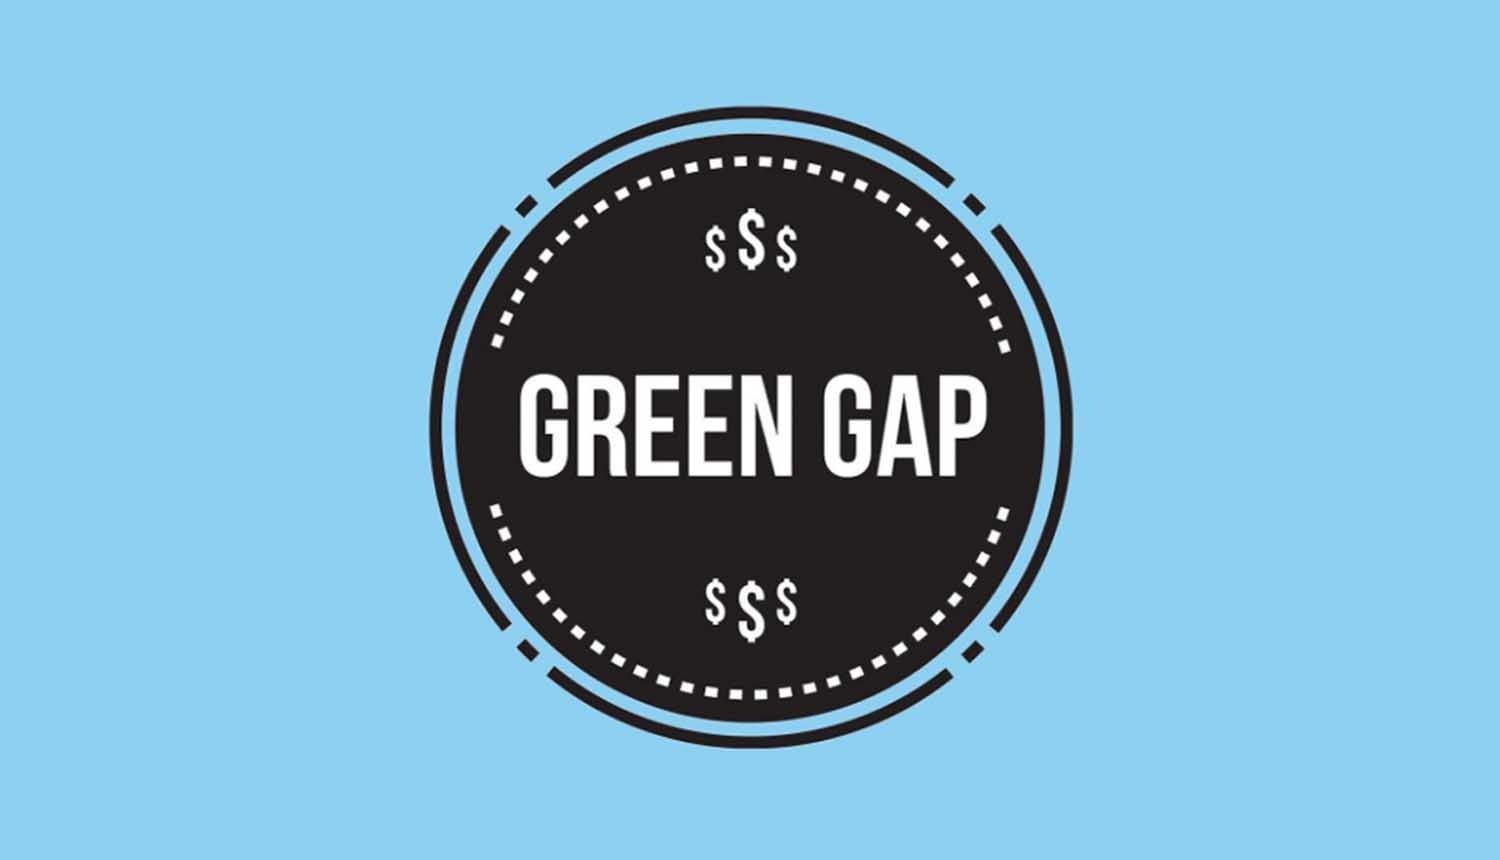 Oola Green Gap Program with Certified Oola Green Gap Coach